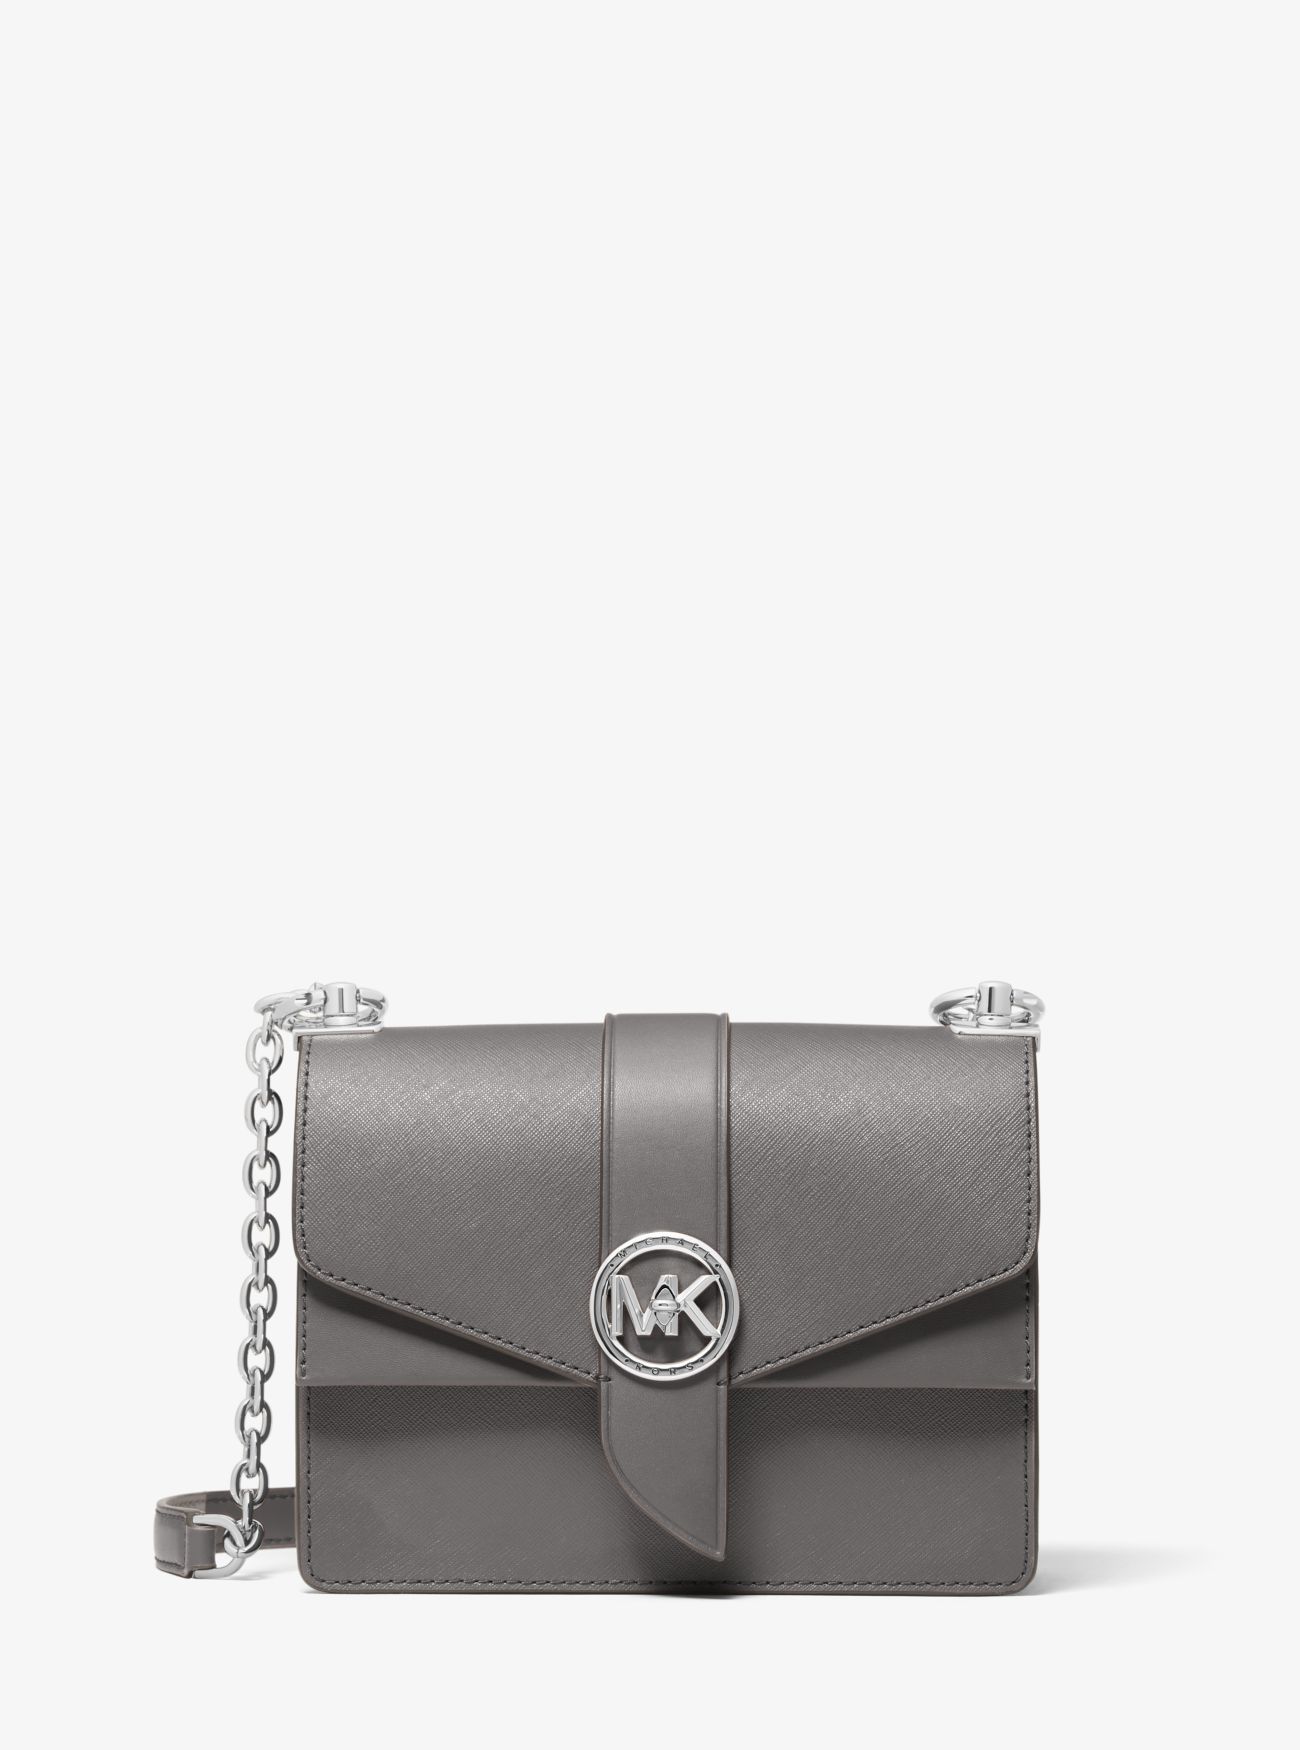 MK Greenwich Small Saffiano Leather Crossbody Bag - Heather Grey - Michael Kors